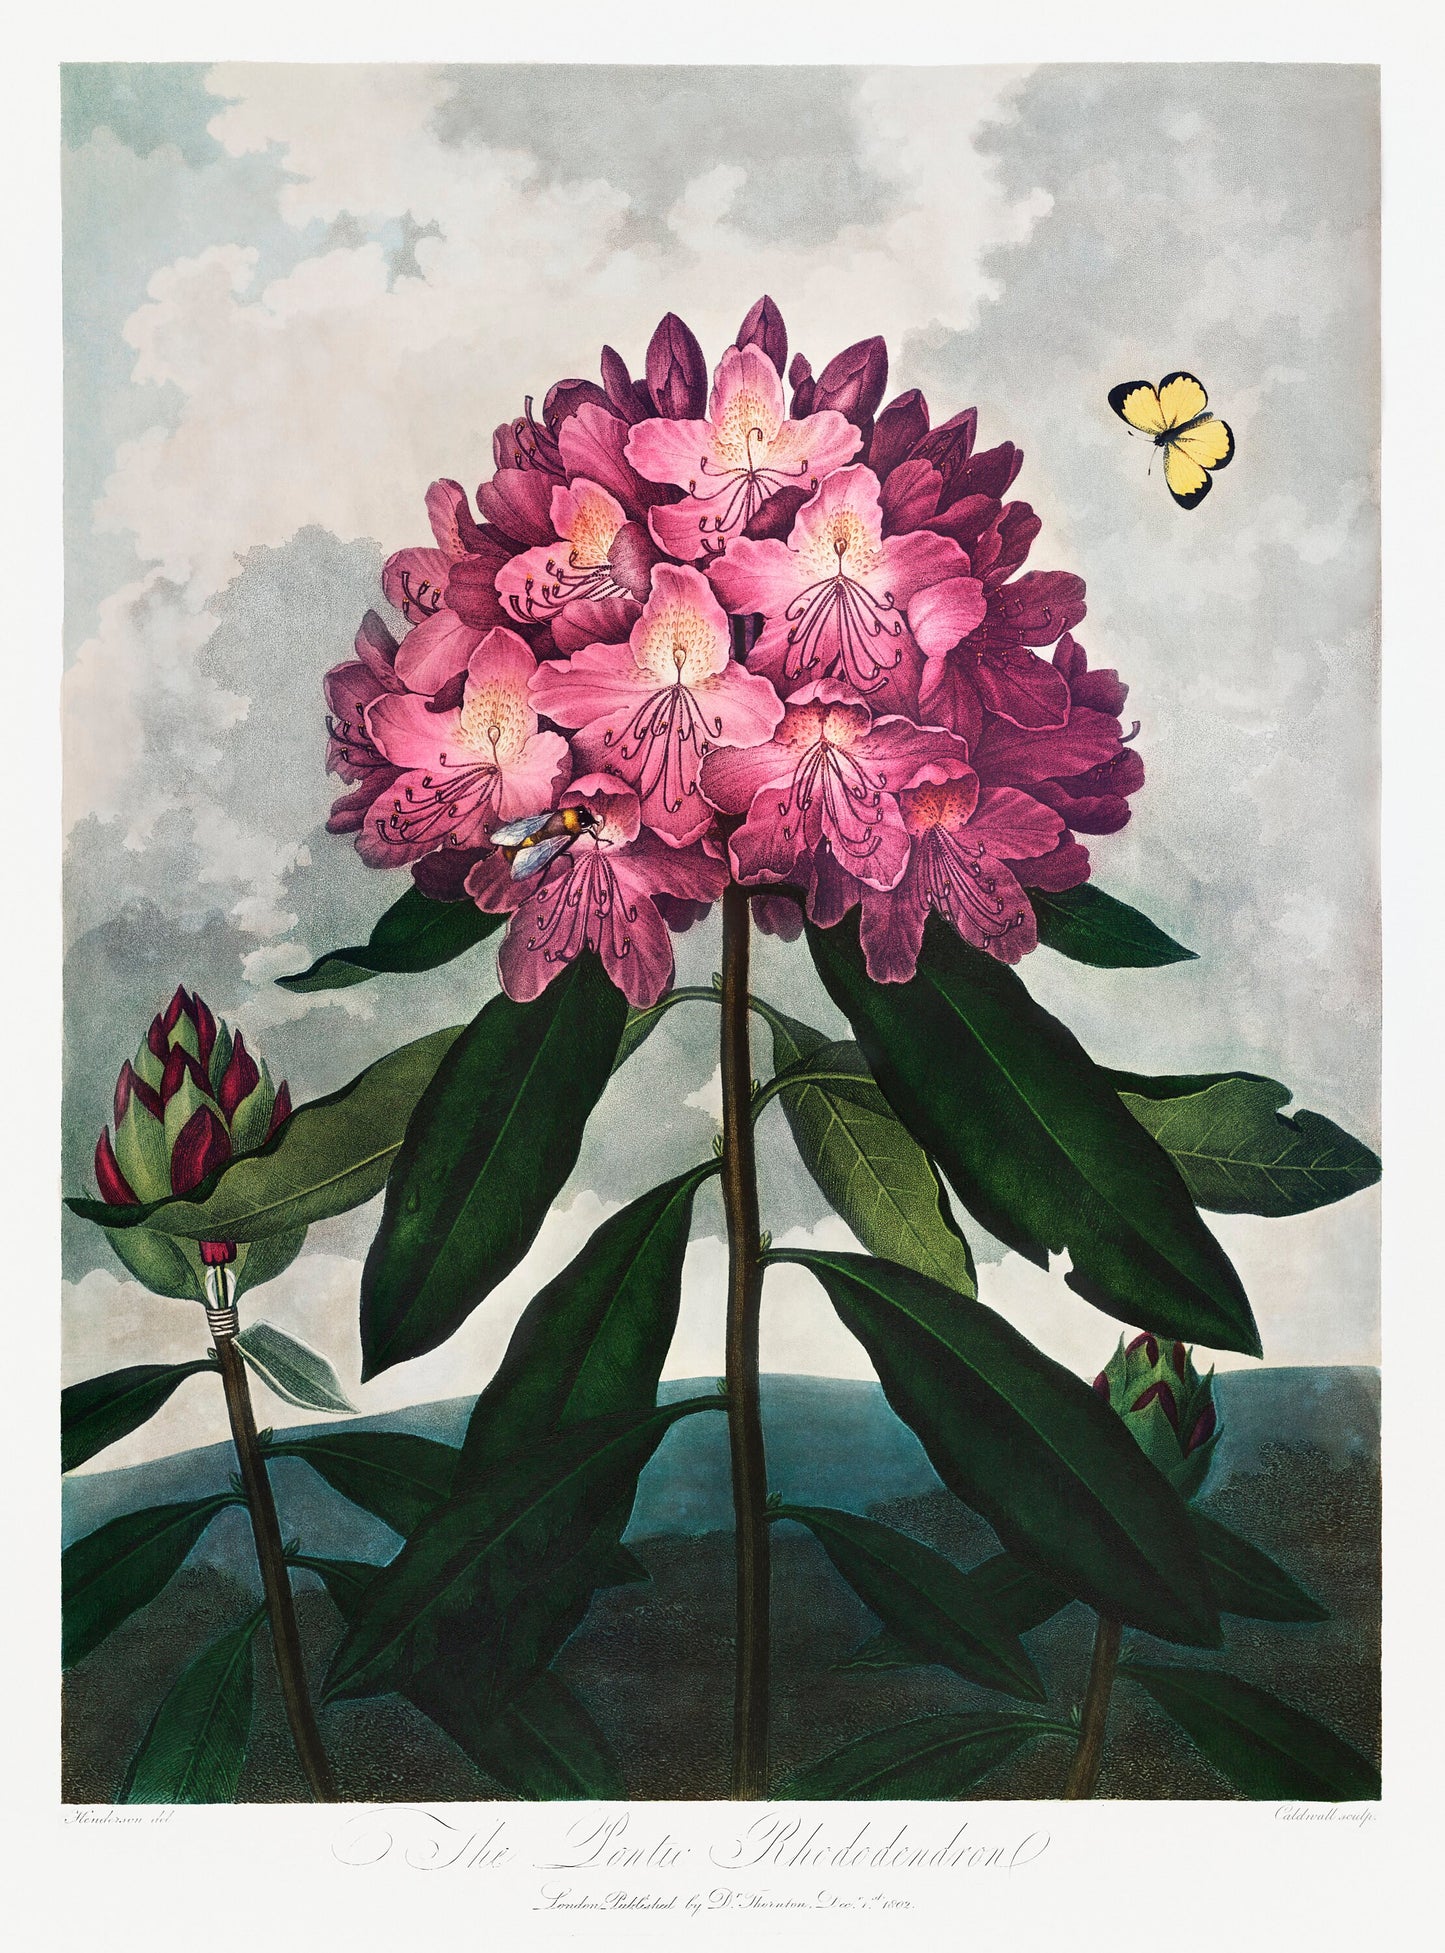 The Pontic Rhododendron | Botanical Prints | Botanical Posters | Flower Prints | Kitchen Wall Decor | Plant Decor | Flower Illustration